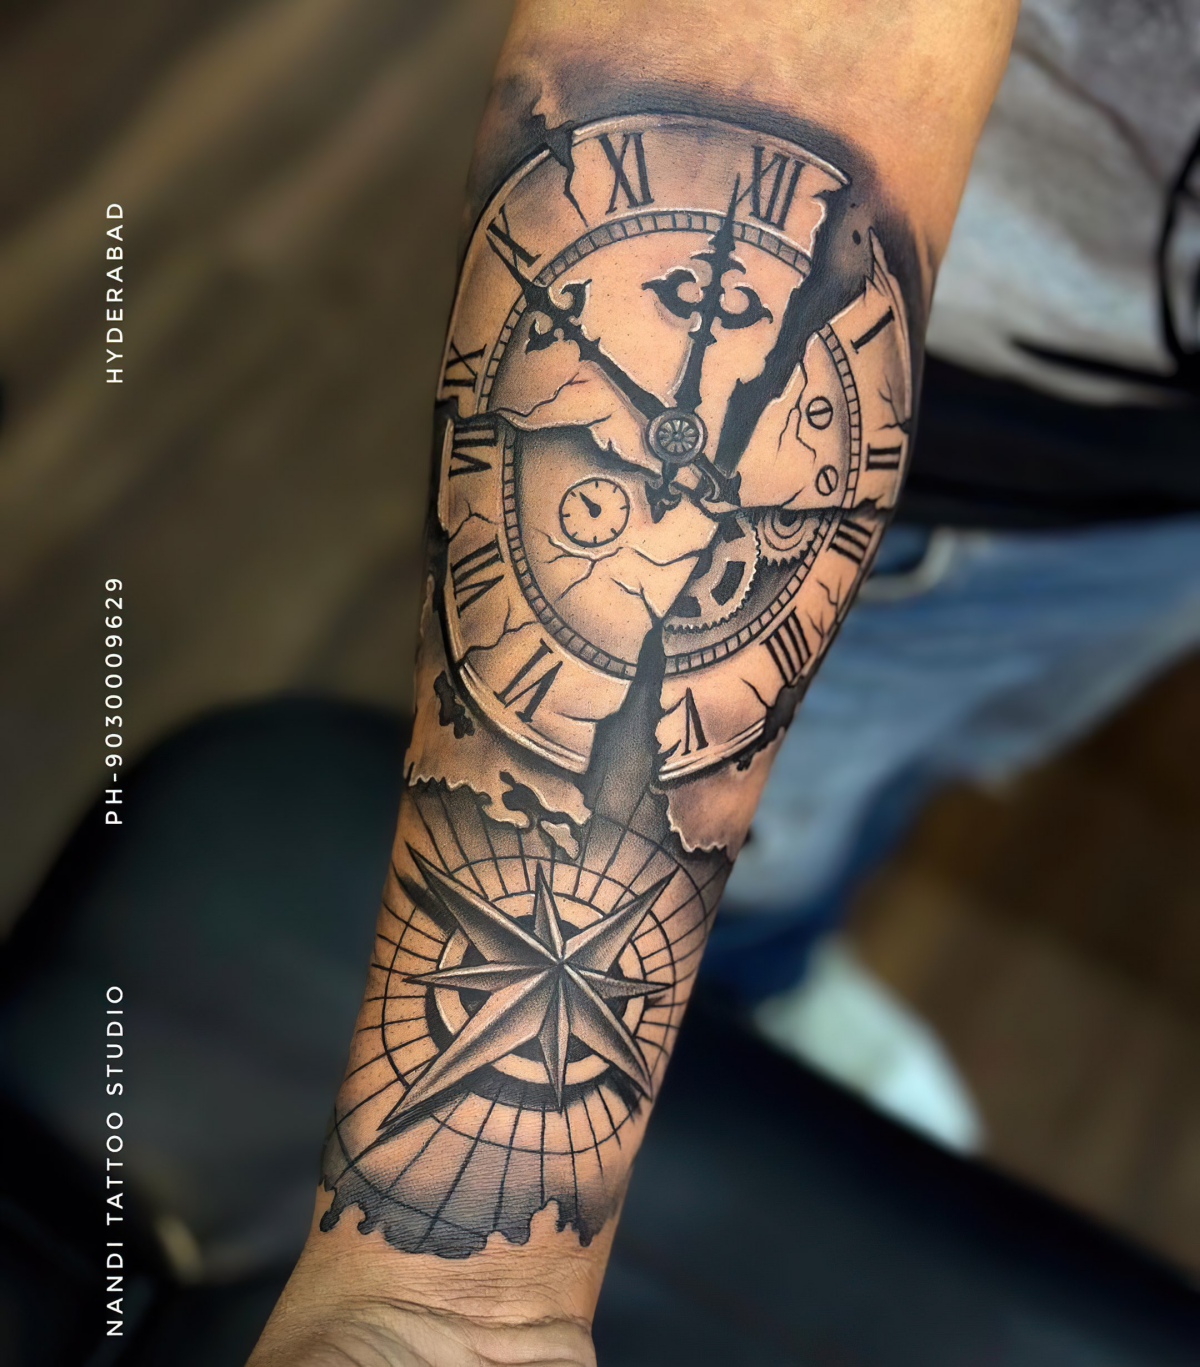 tattoo uhr des lebens mit kompass nanditattoos